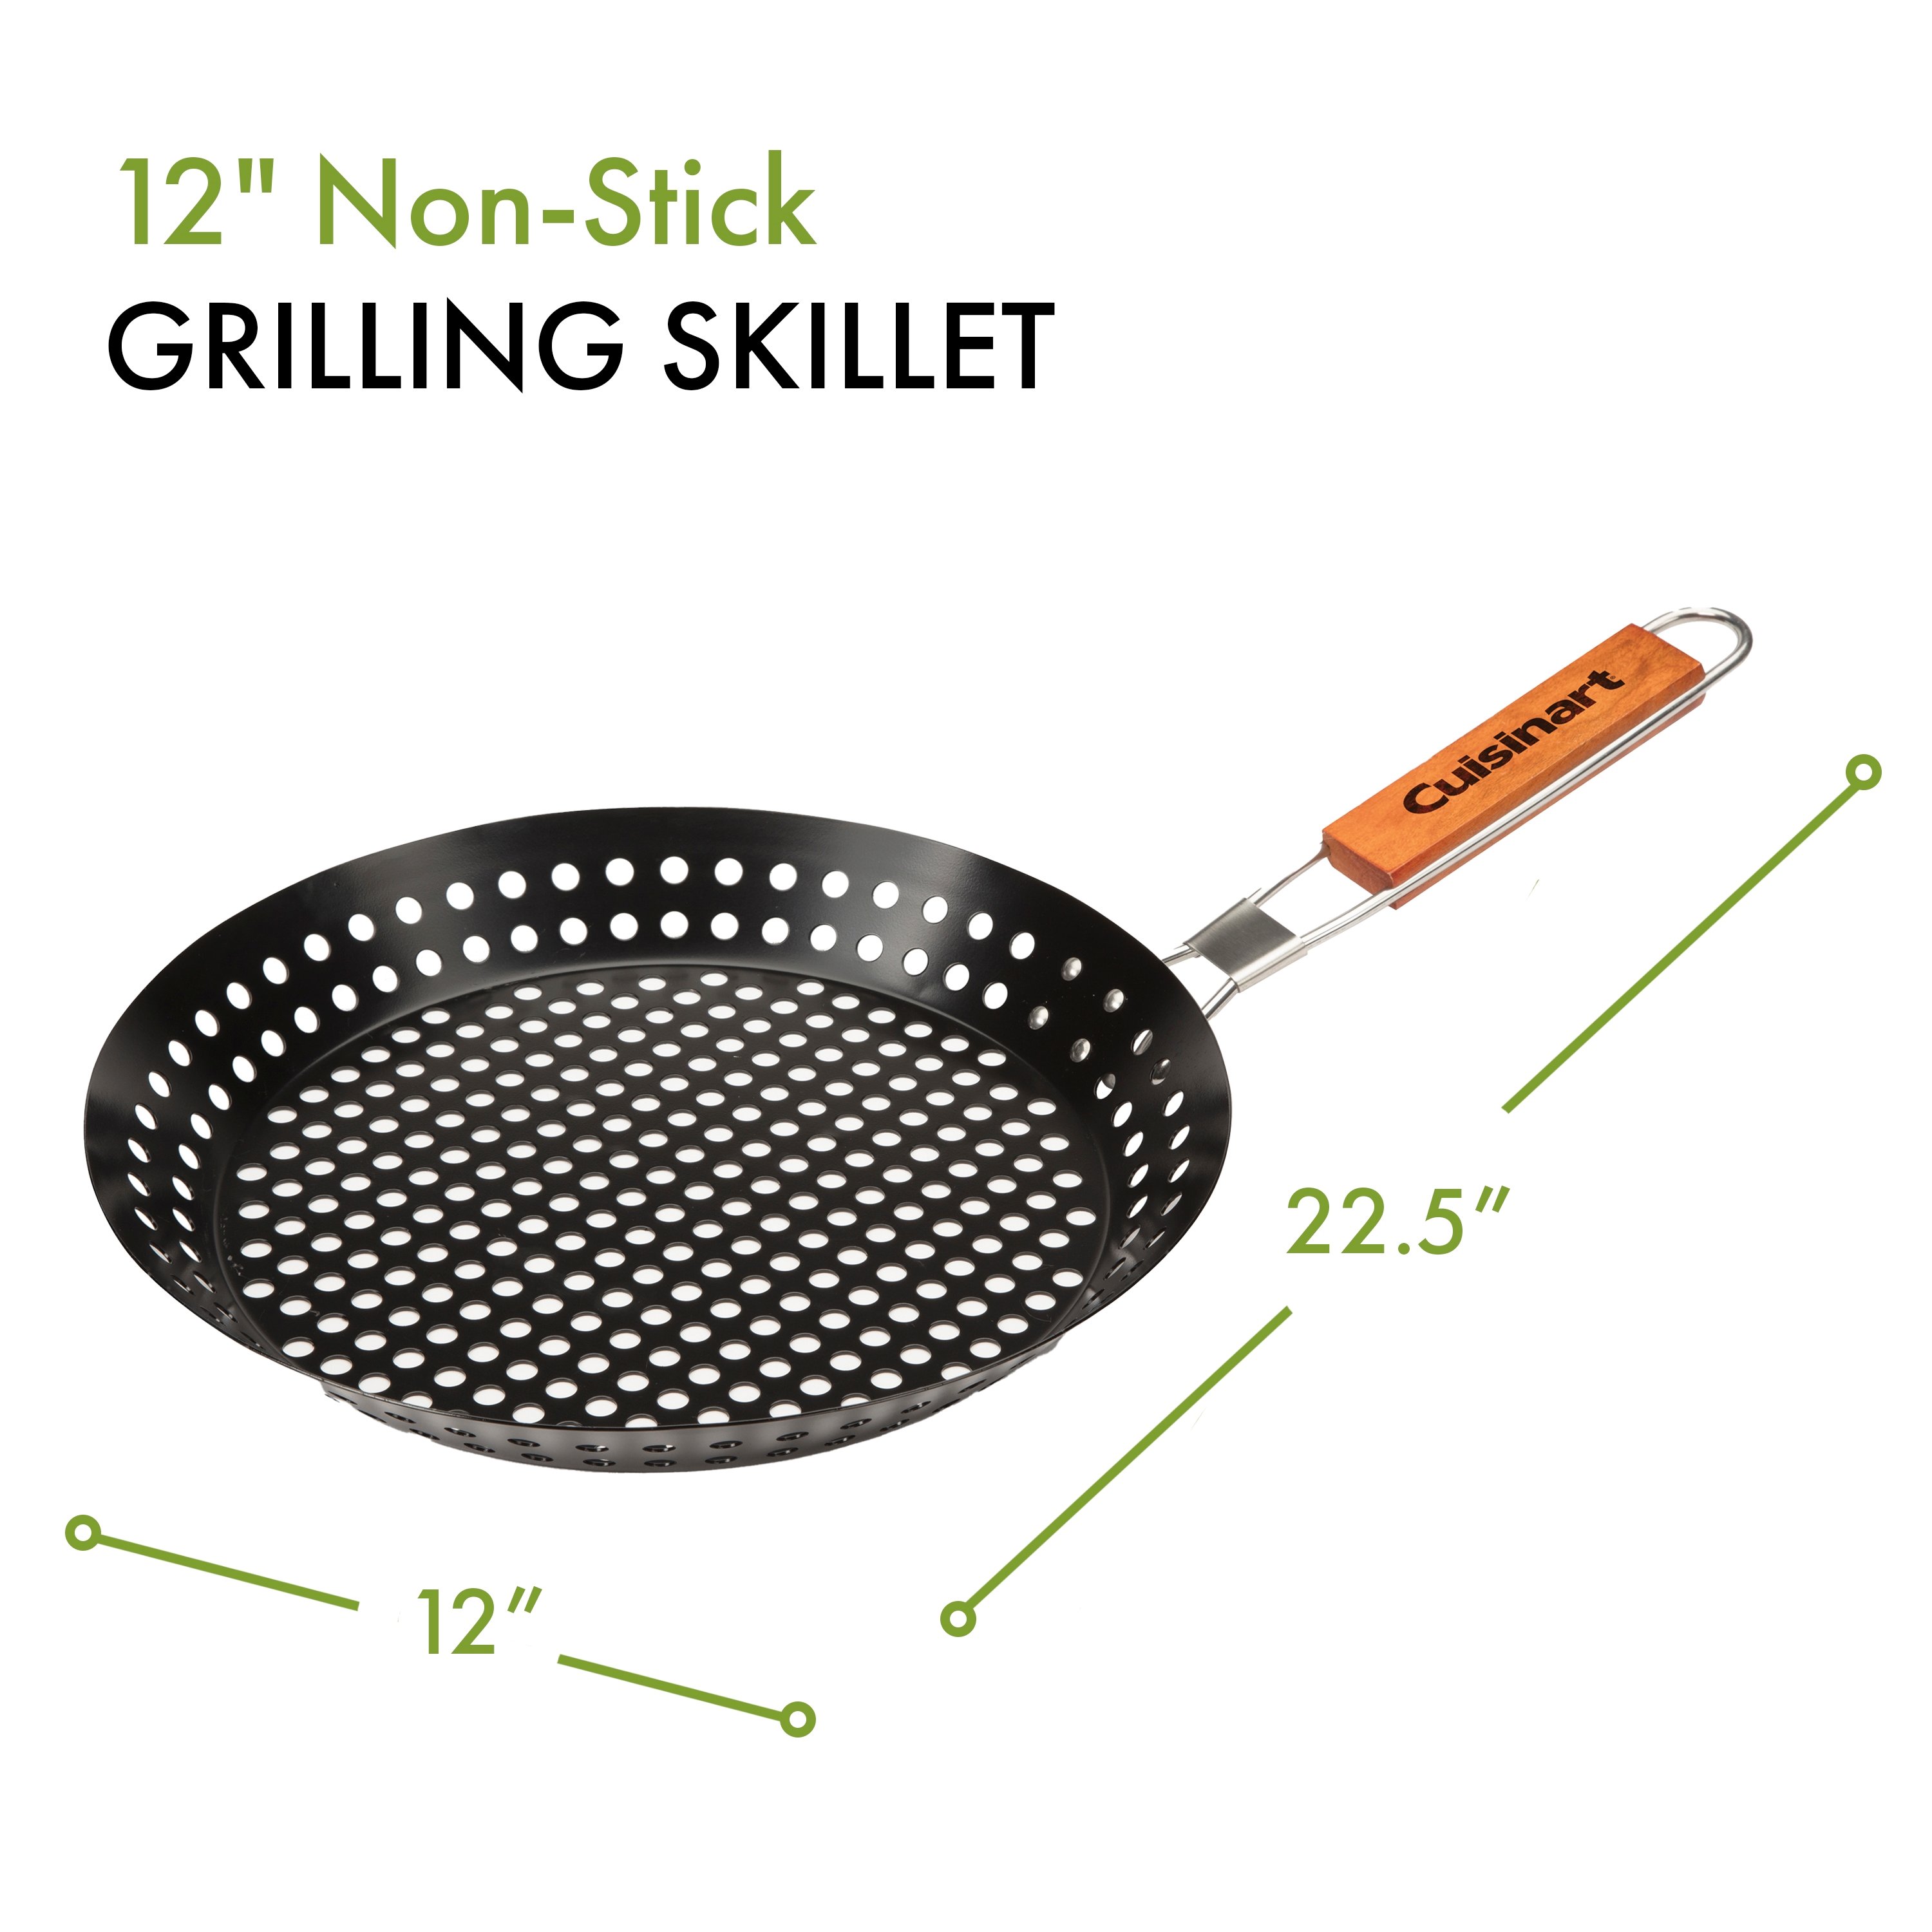 Cuisinart MultiClad Pro 12 Non-Stick Skillet - Stainless Steel